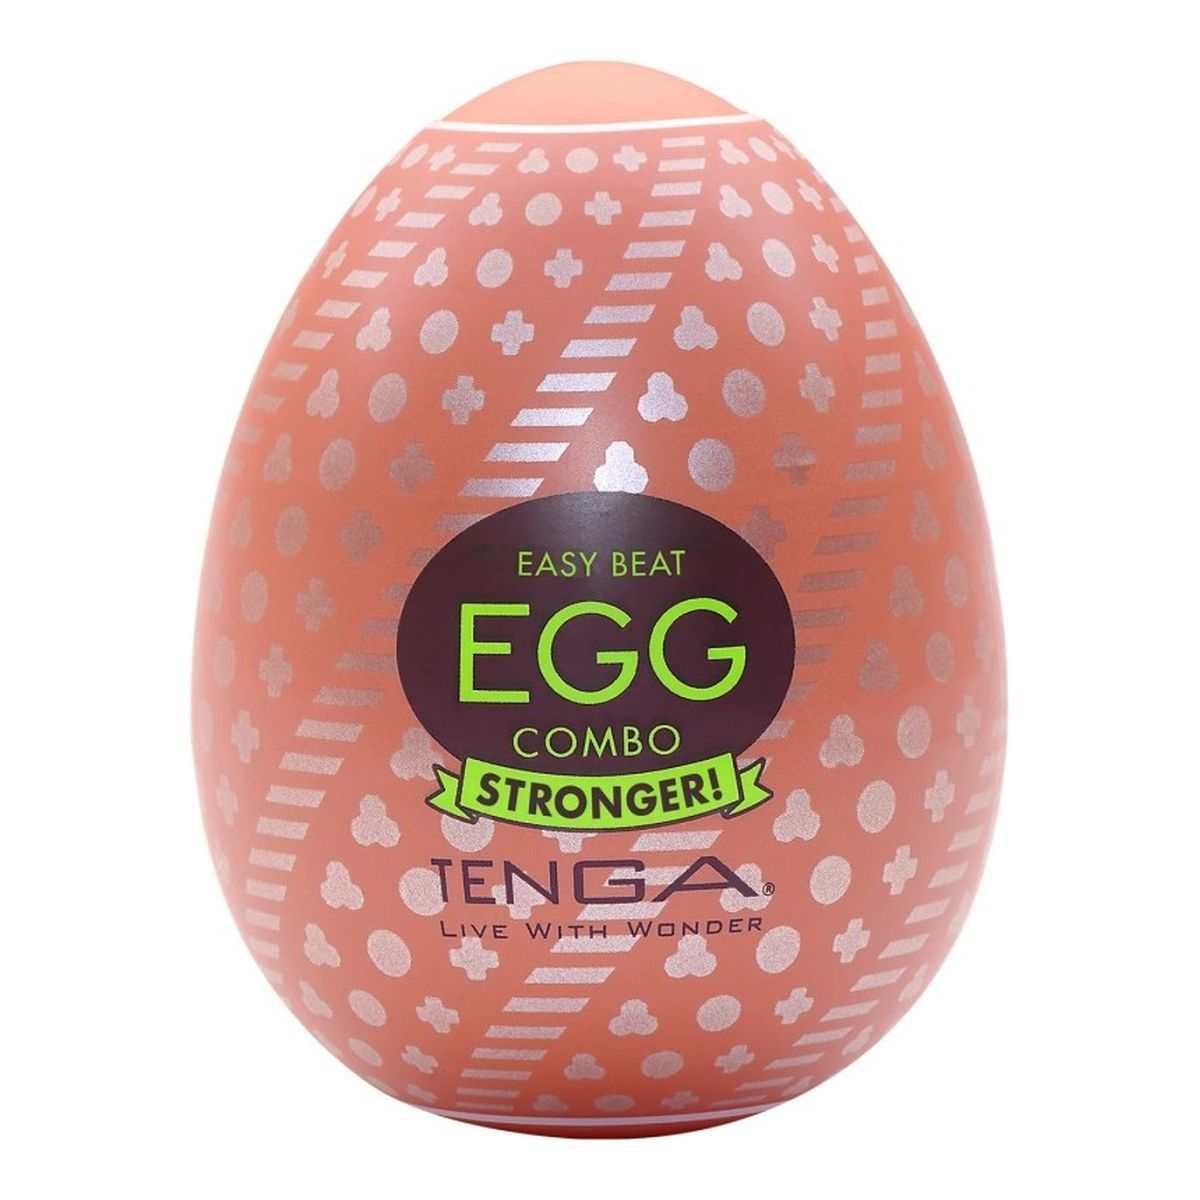 Tenga Easy beat egg combo stronger jednorazowy masturbator w kształcie jajka